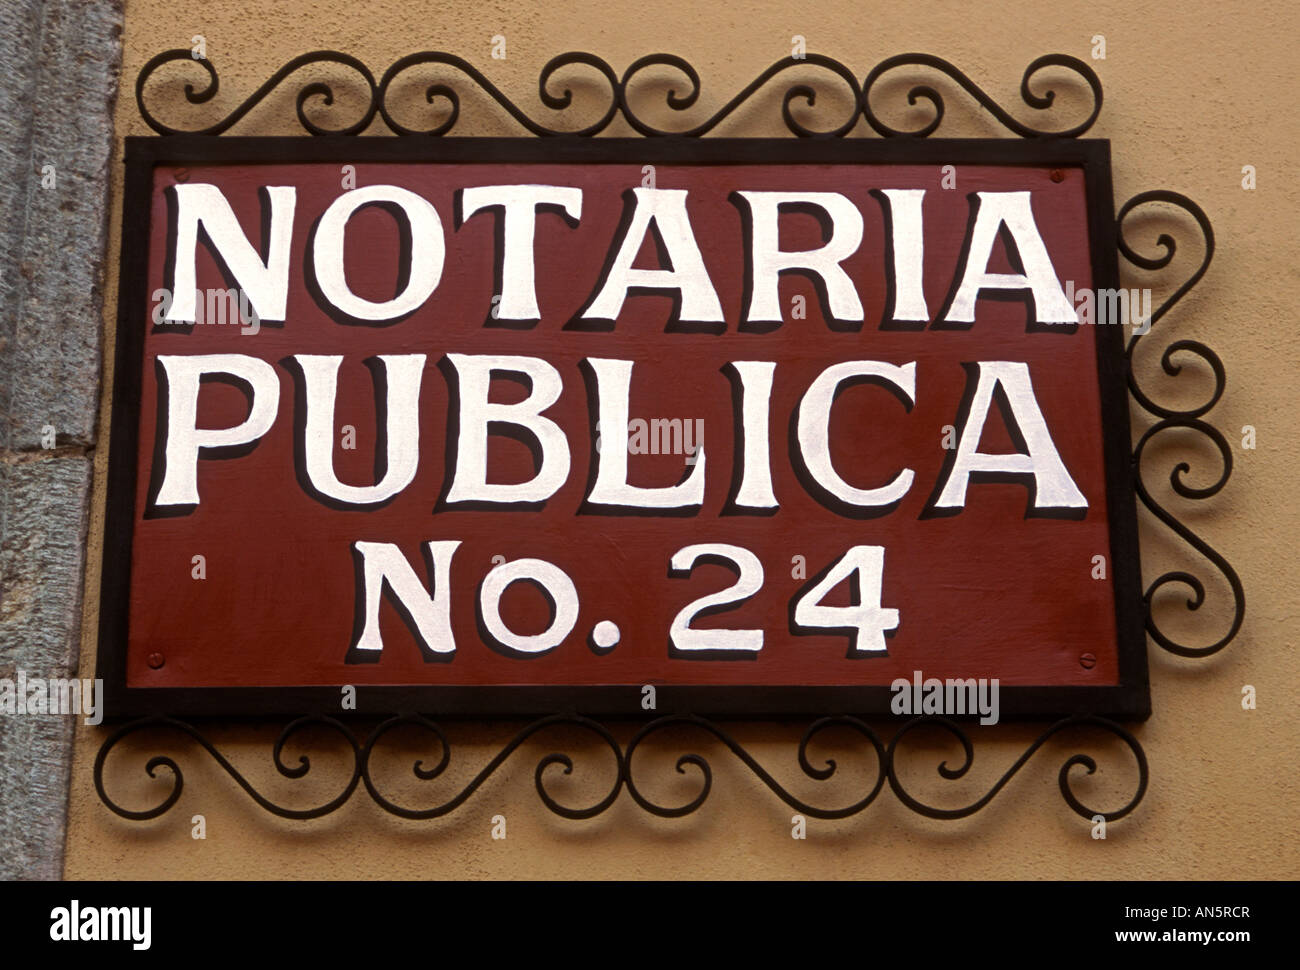 Firmar, notario público, notaria publica, número 24, ciudad capital, Oaxaca, Oaxaca de Juárez, Oaxaca, México Foto de stock